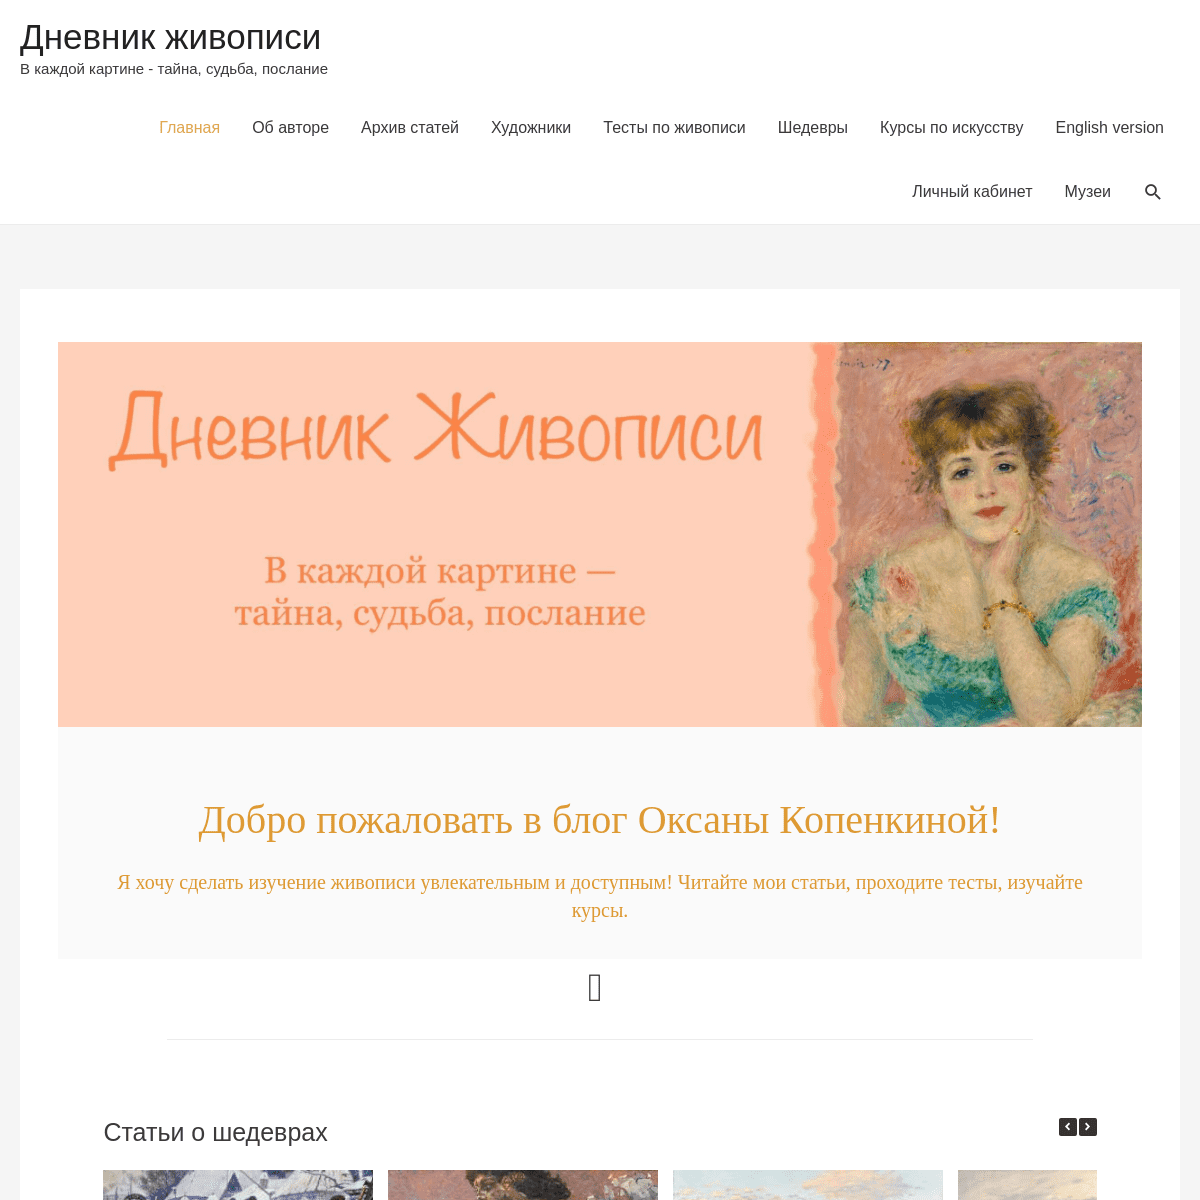 A complete backup of arts-dnevnik.ru